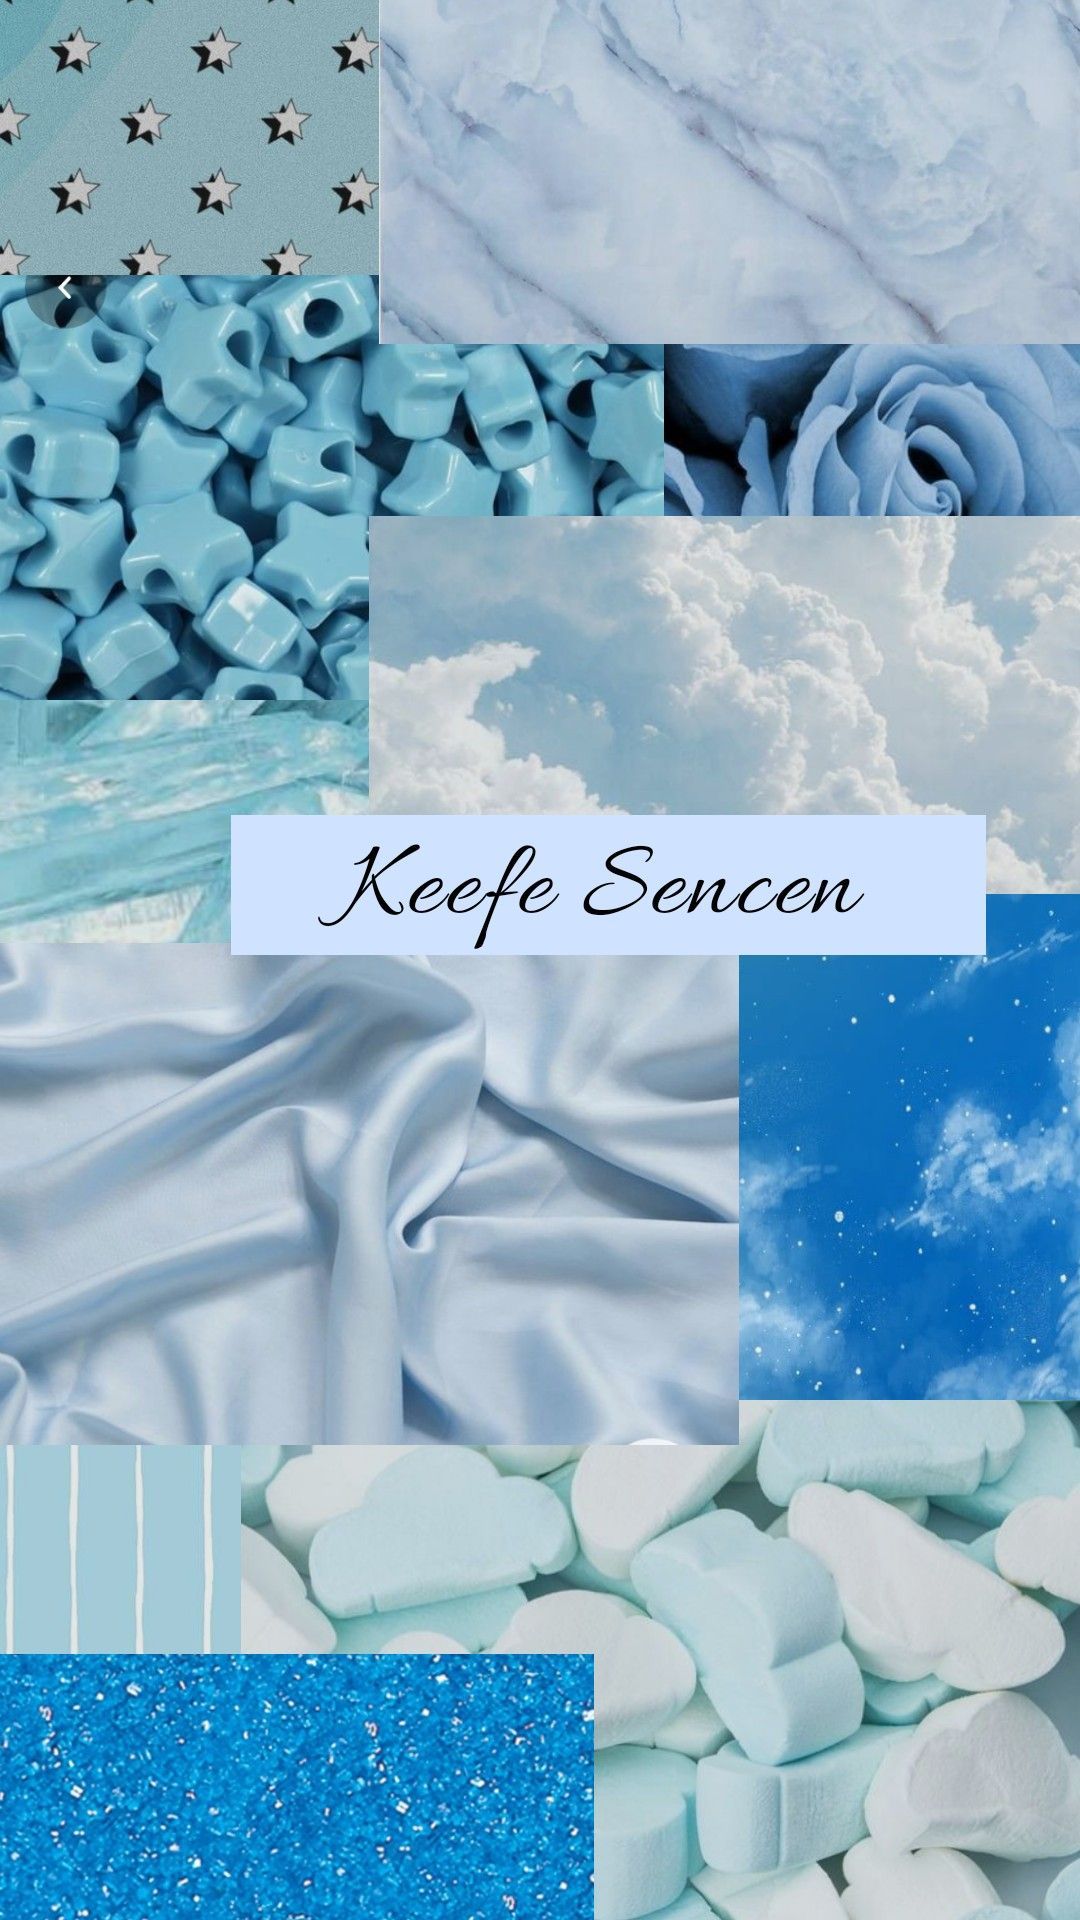 Keefe sencen aesthetic wallpaper. Boyfriend quiz, Artsy background, The best series ever